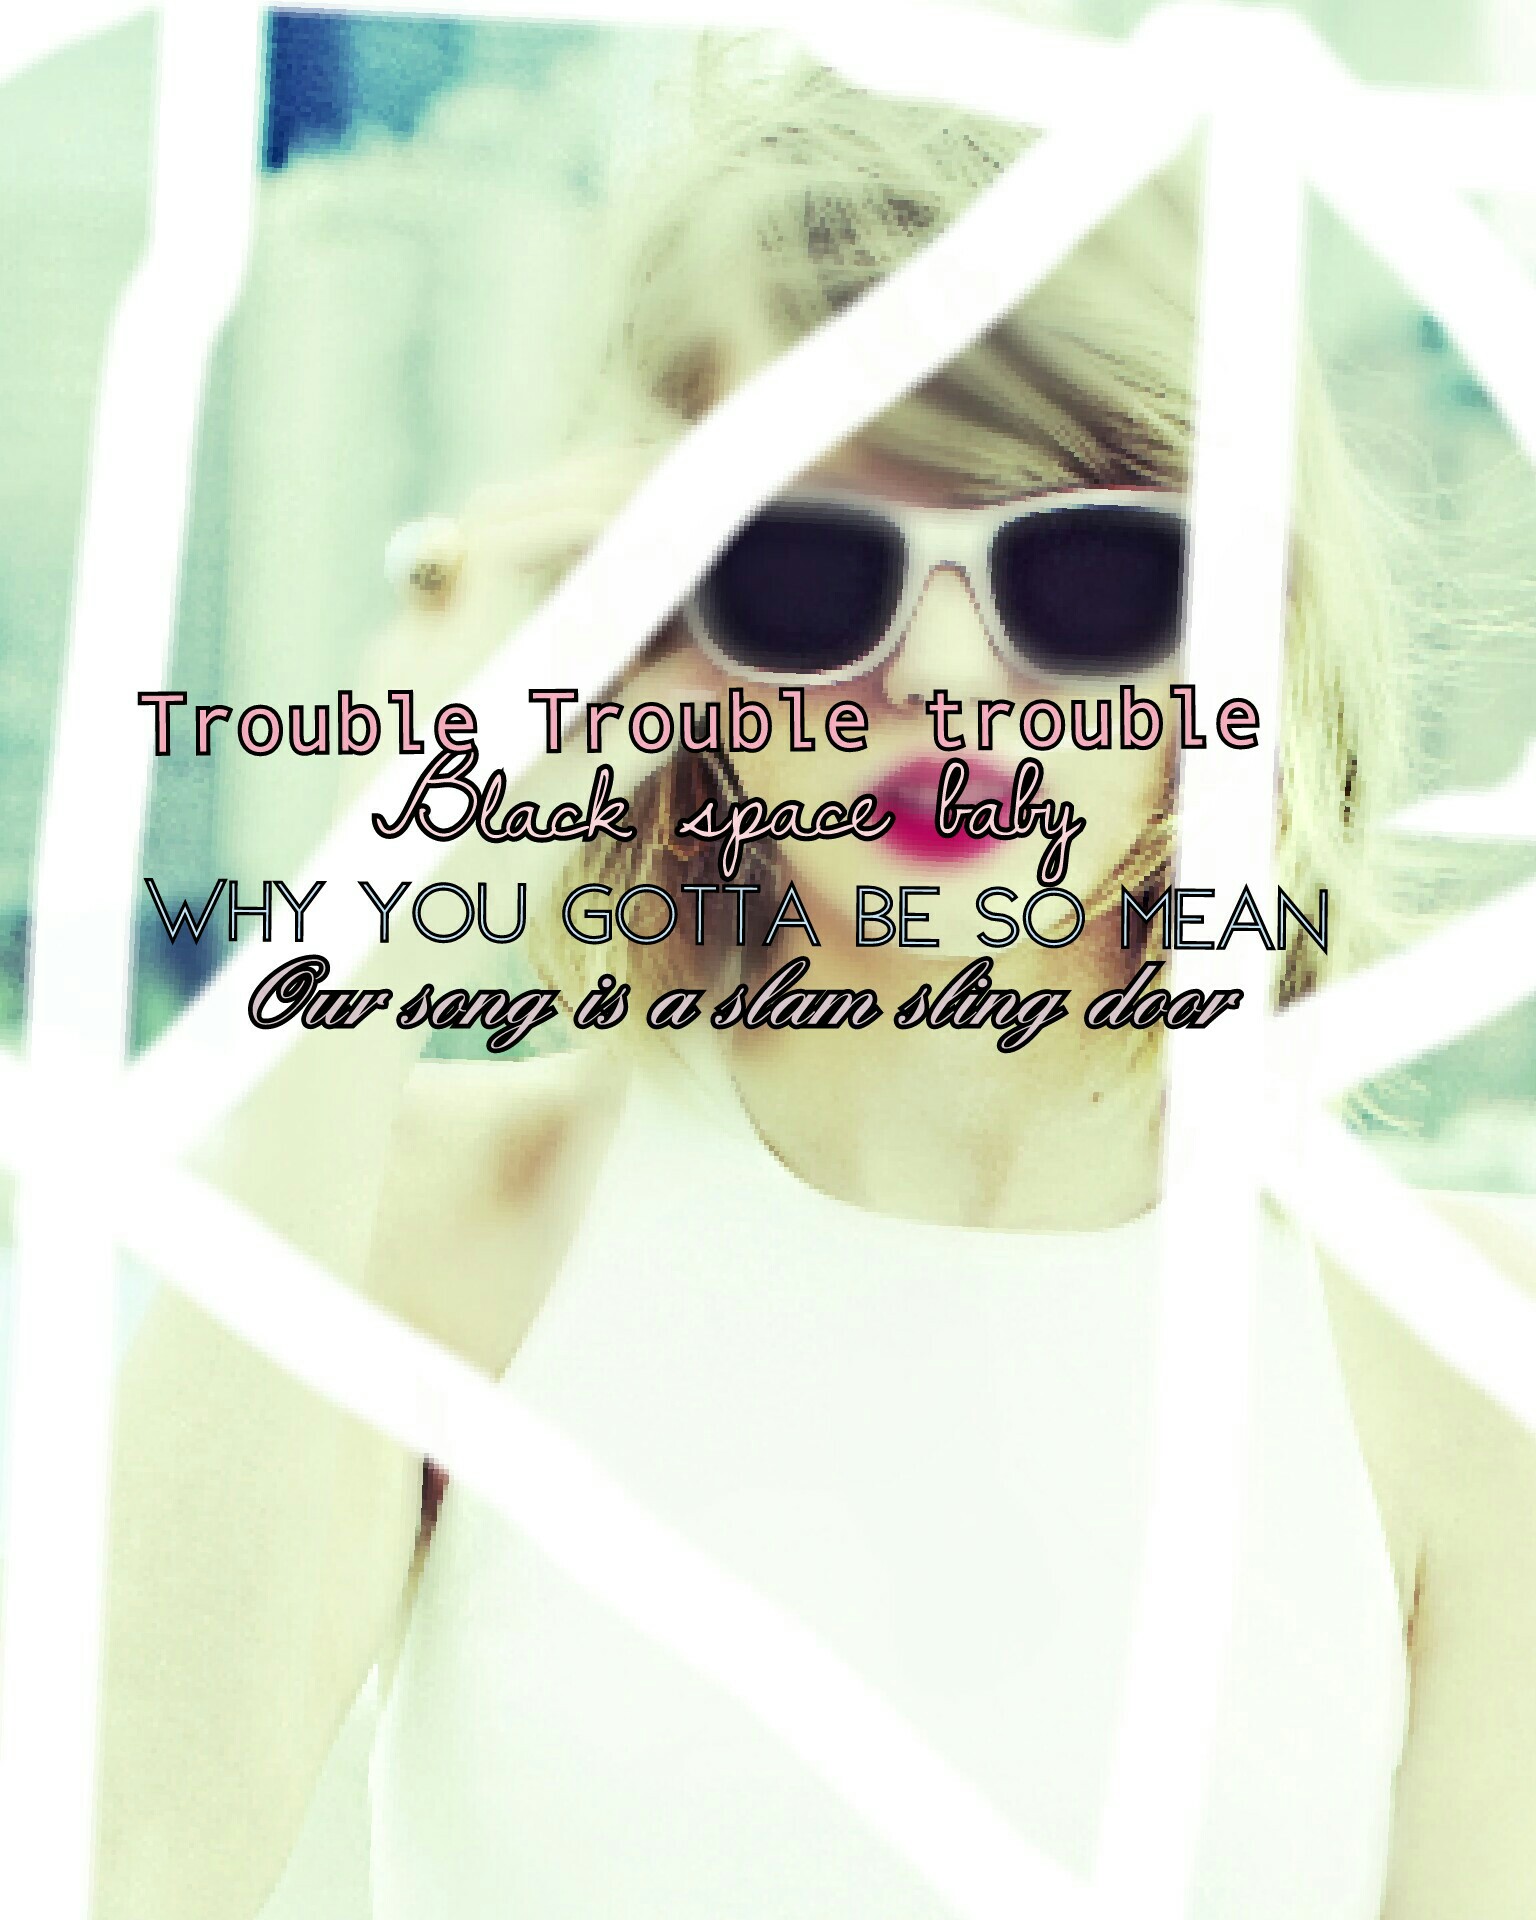 Trouble Trouble trouble 